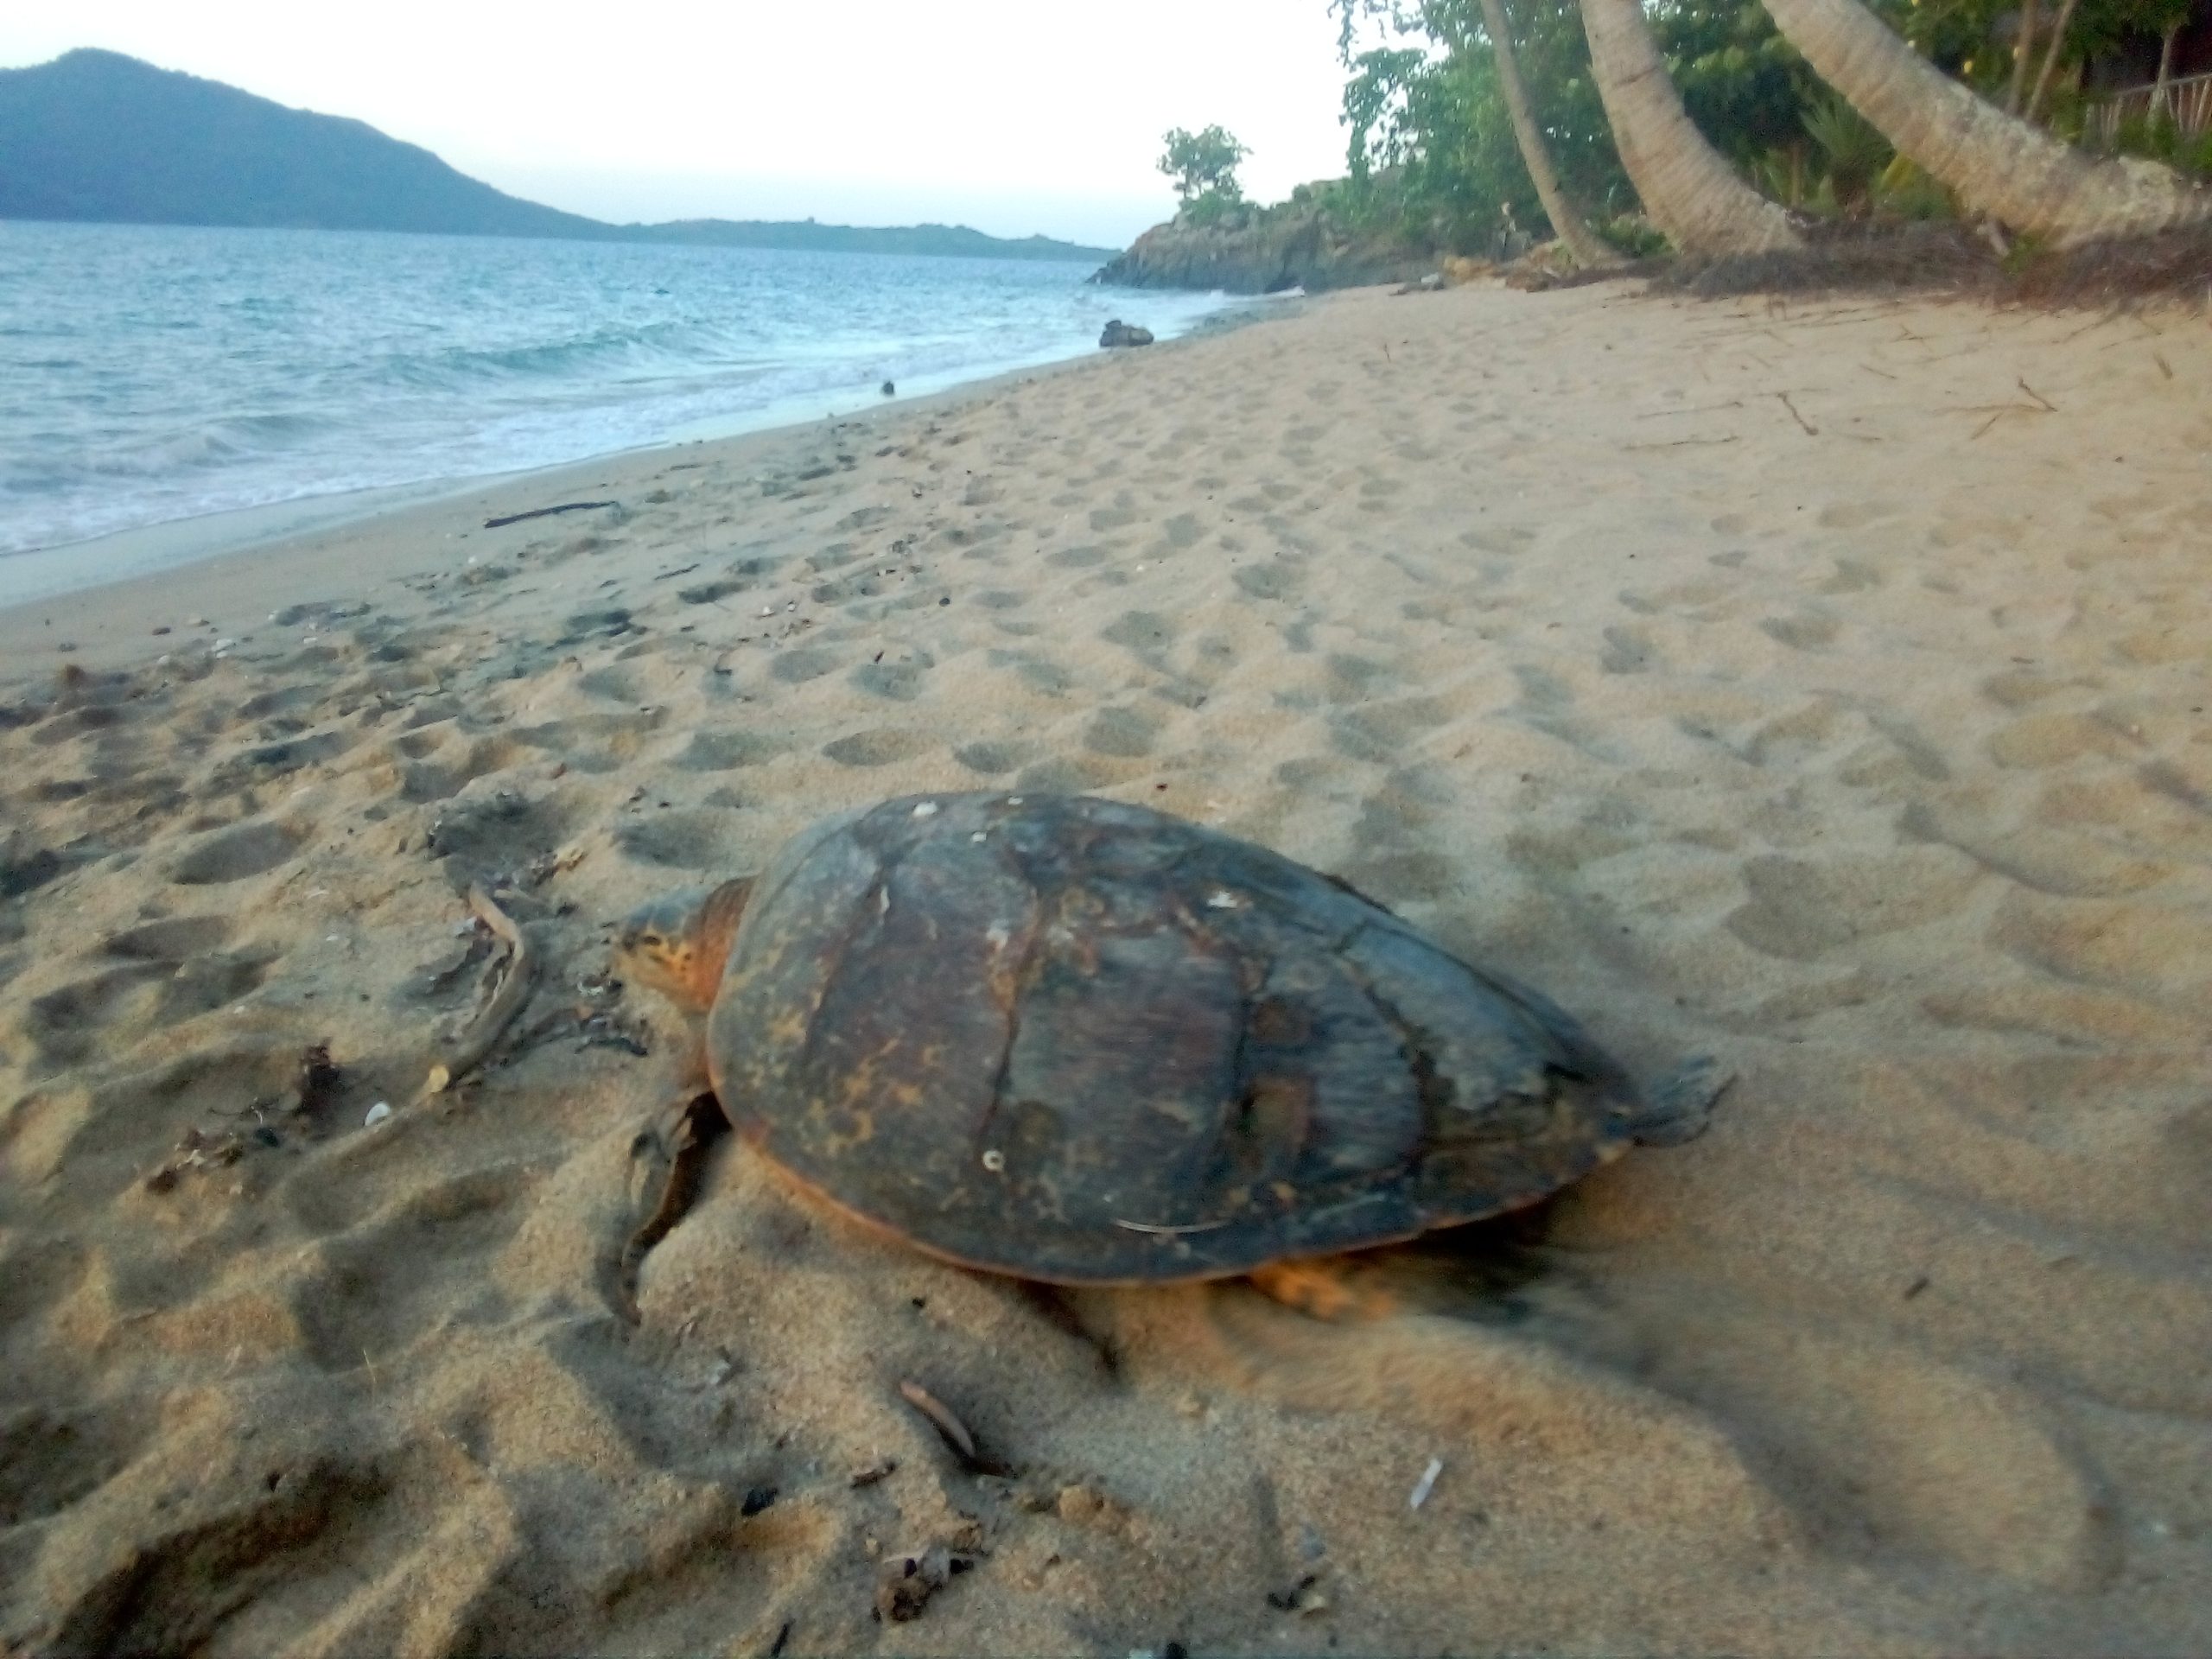 Sea Turtle Monitoring - Nesting 2018